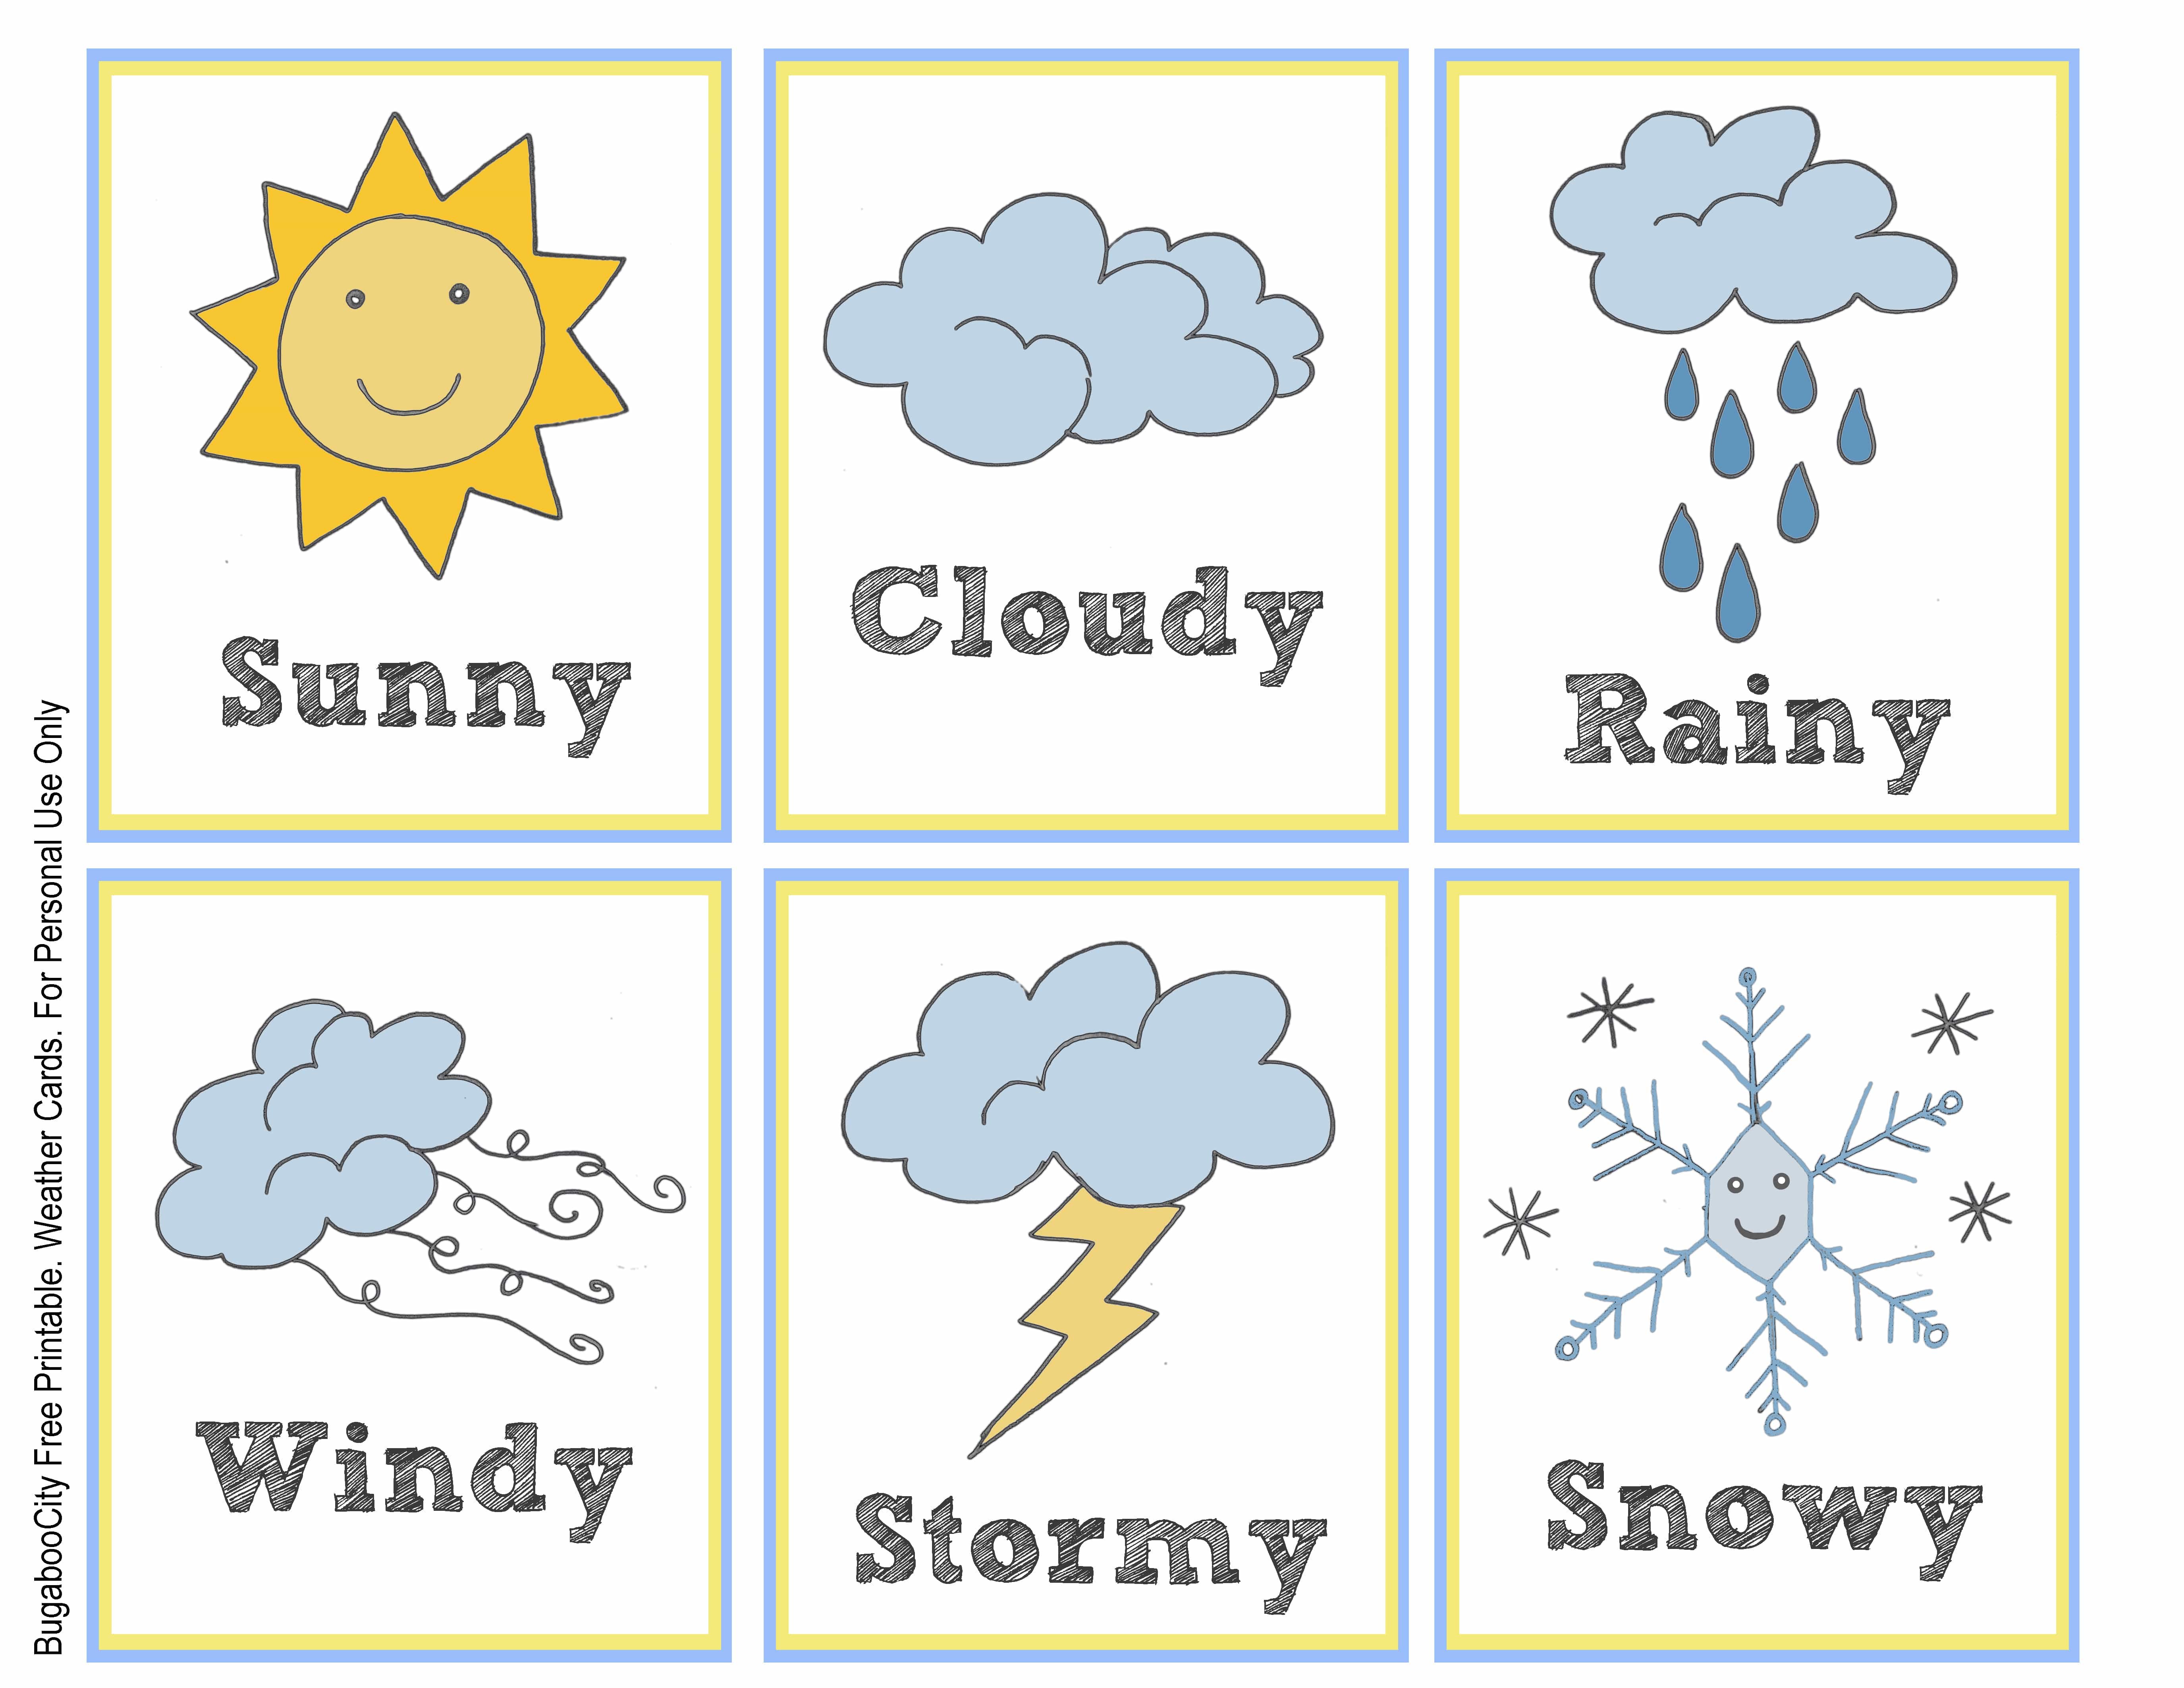 How the weather. Карточки weather для детей. Weather для детей на английском. Weather карточки для распечатывания. Карточки с изображением времени года.